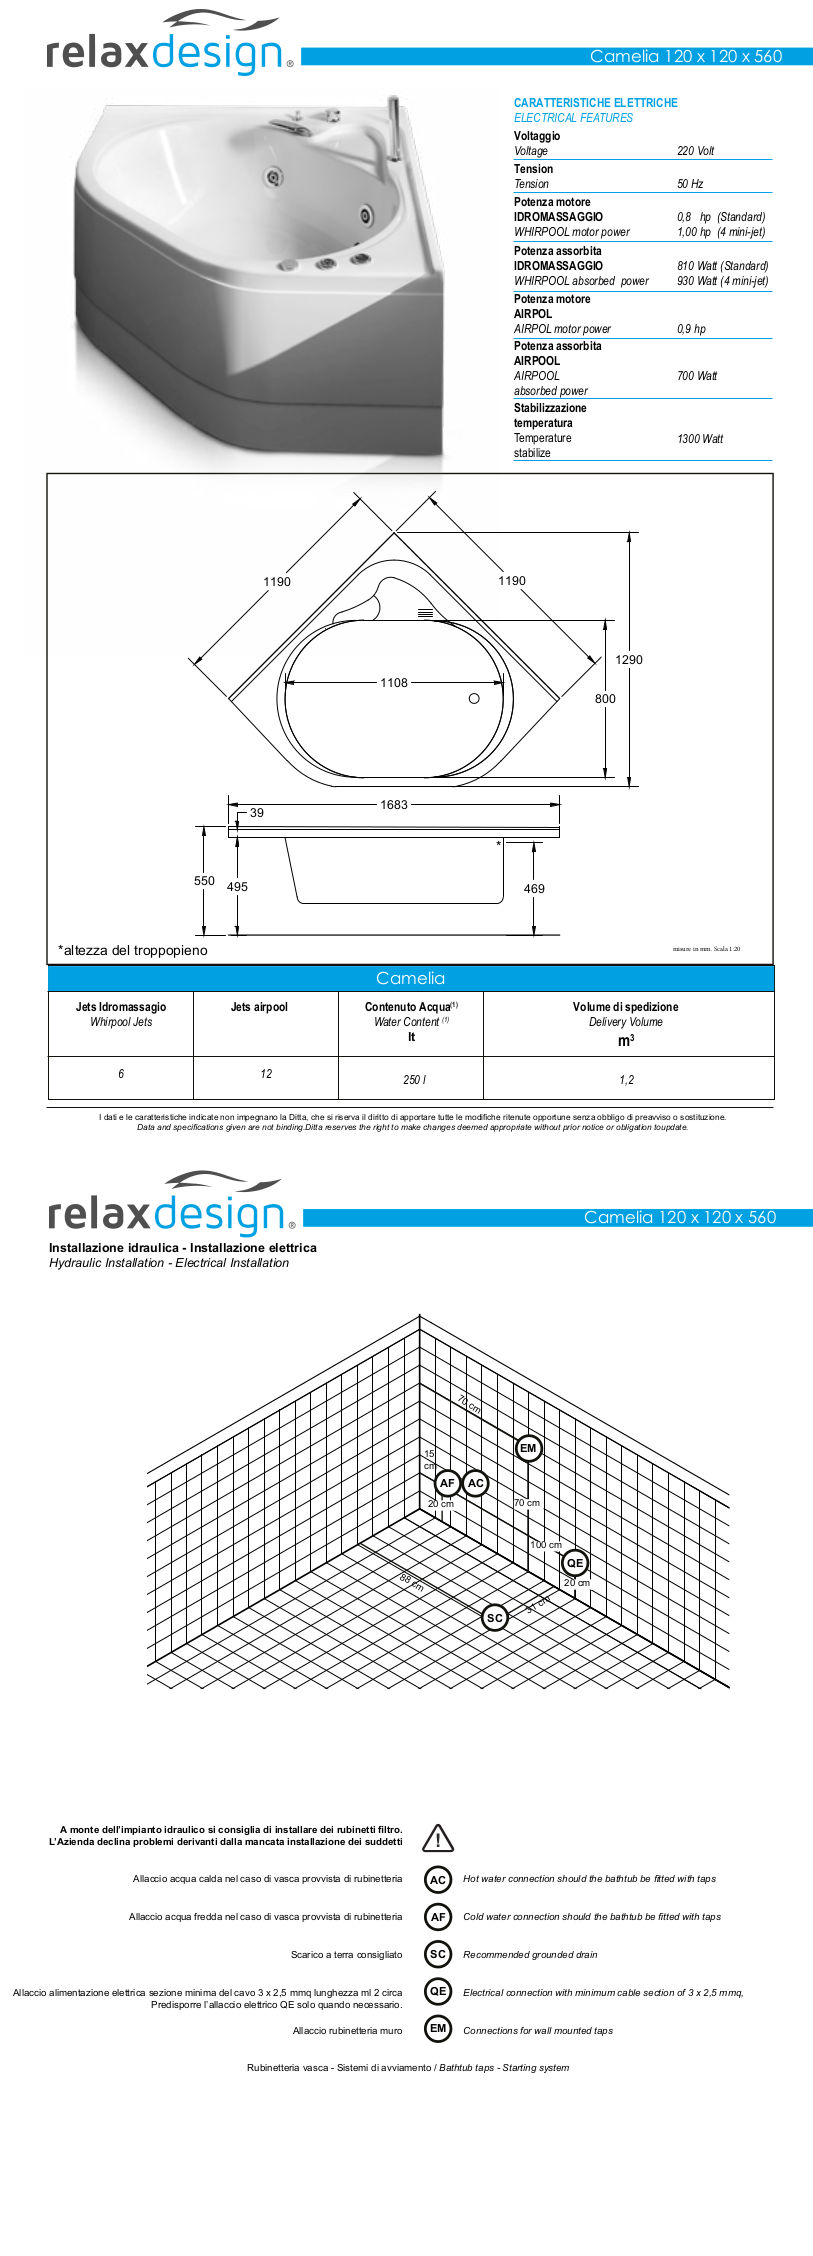 camelia relax design bathtub data sheet